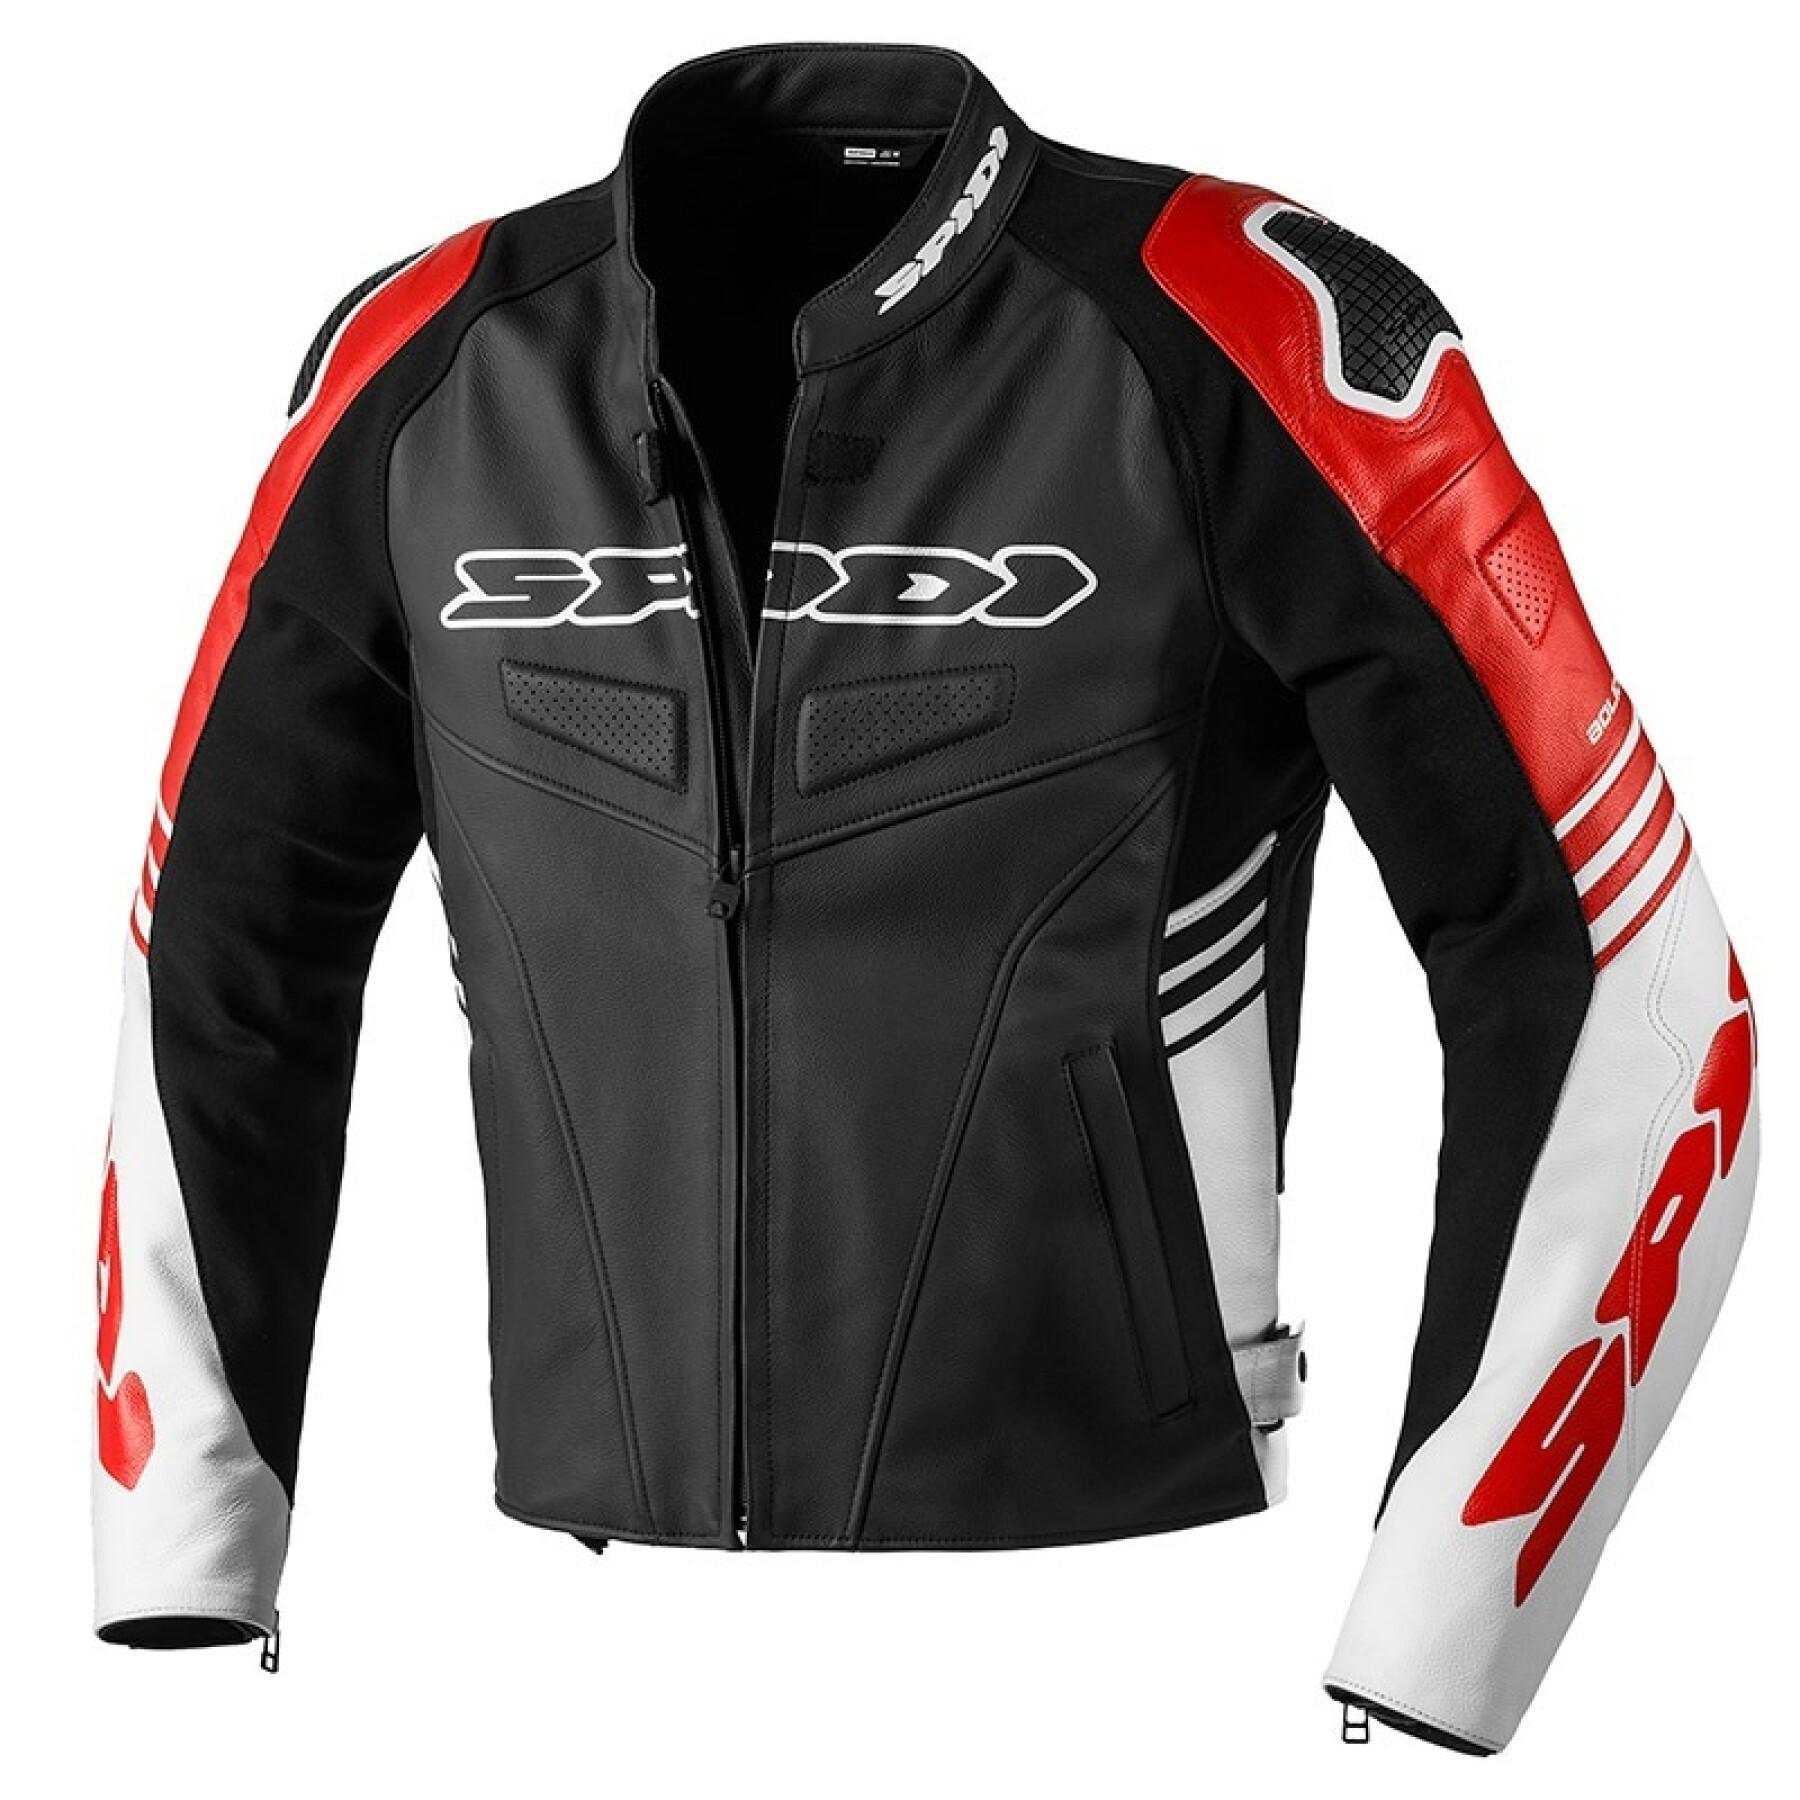 Leather motorcycle jacket Spidi track Warrior